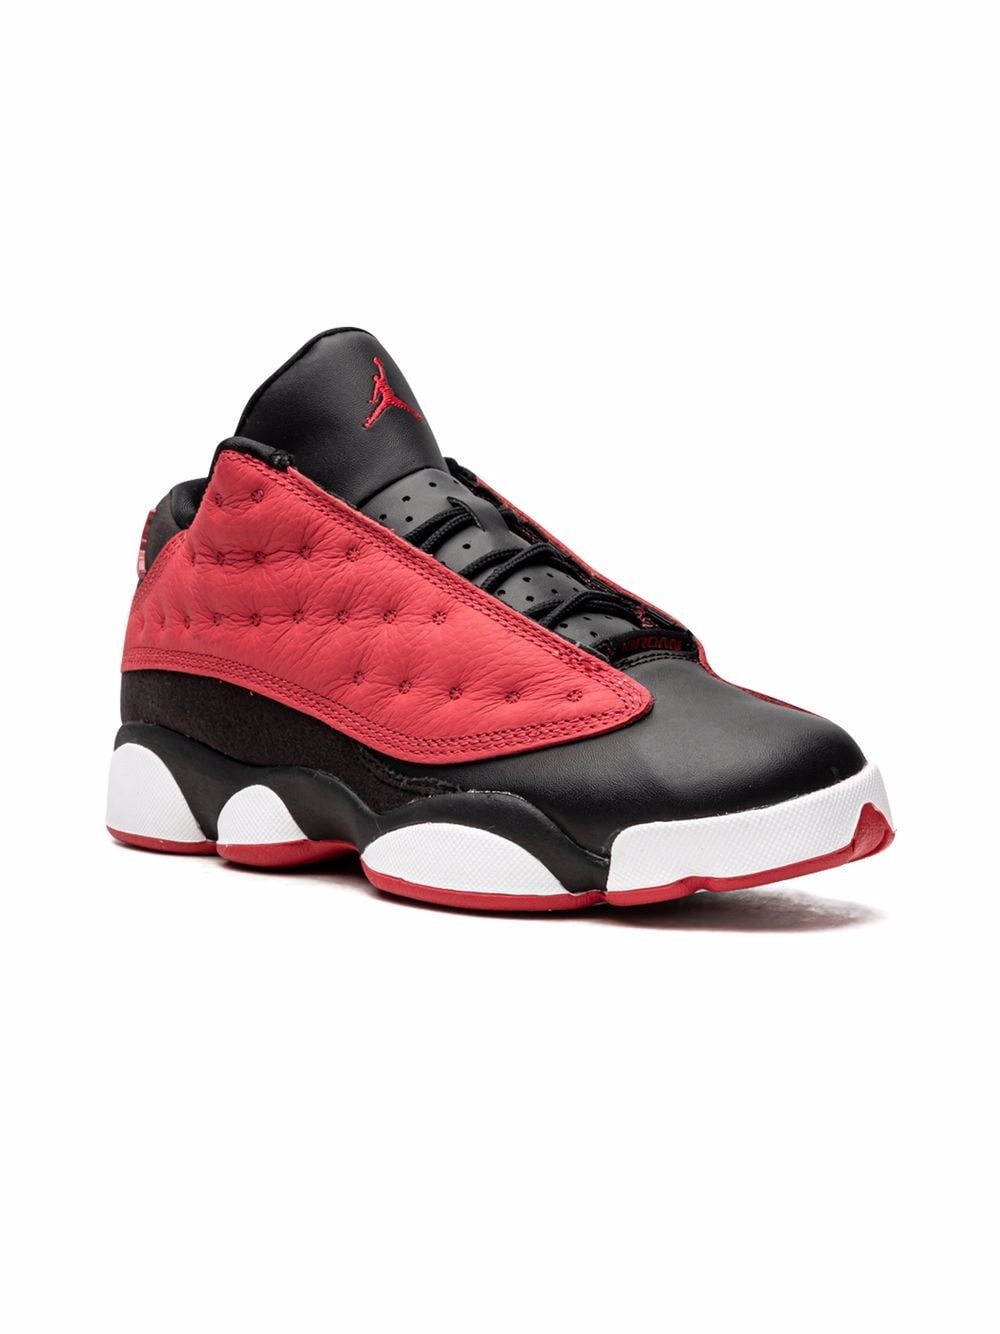 Jordan Kids Air Jordan 13 Low "Very Berry" sneakers - Black von Jordan Kids